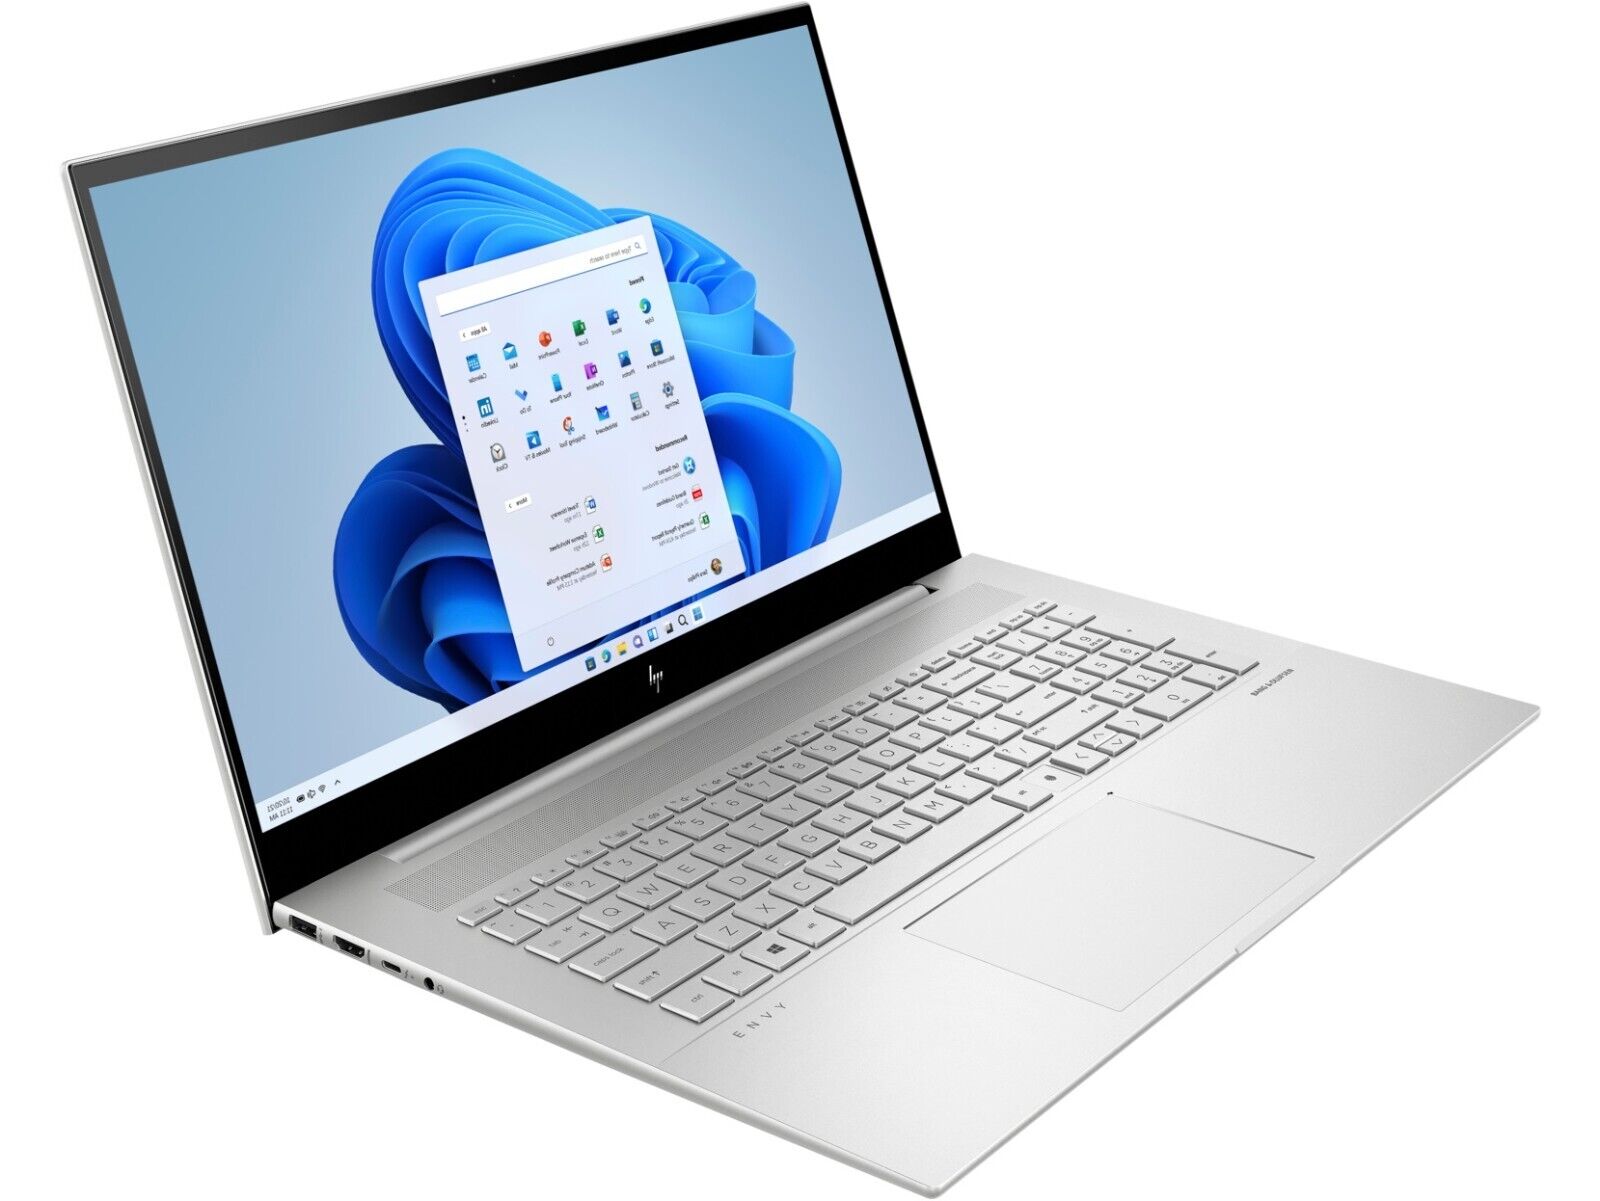 HP Envy Touch 17t-ch100 17 Laptop PC 17.3